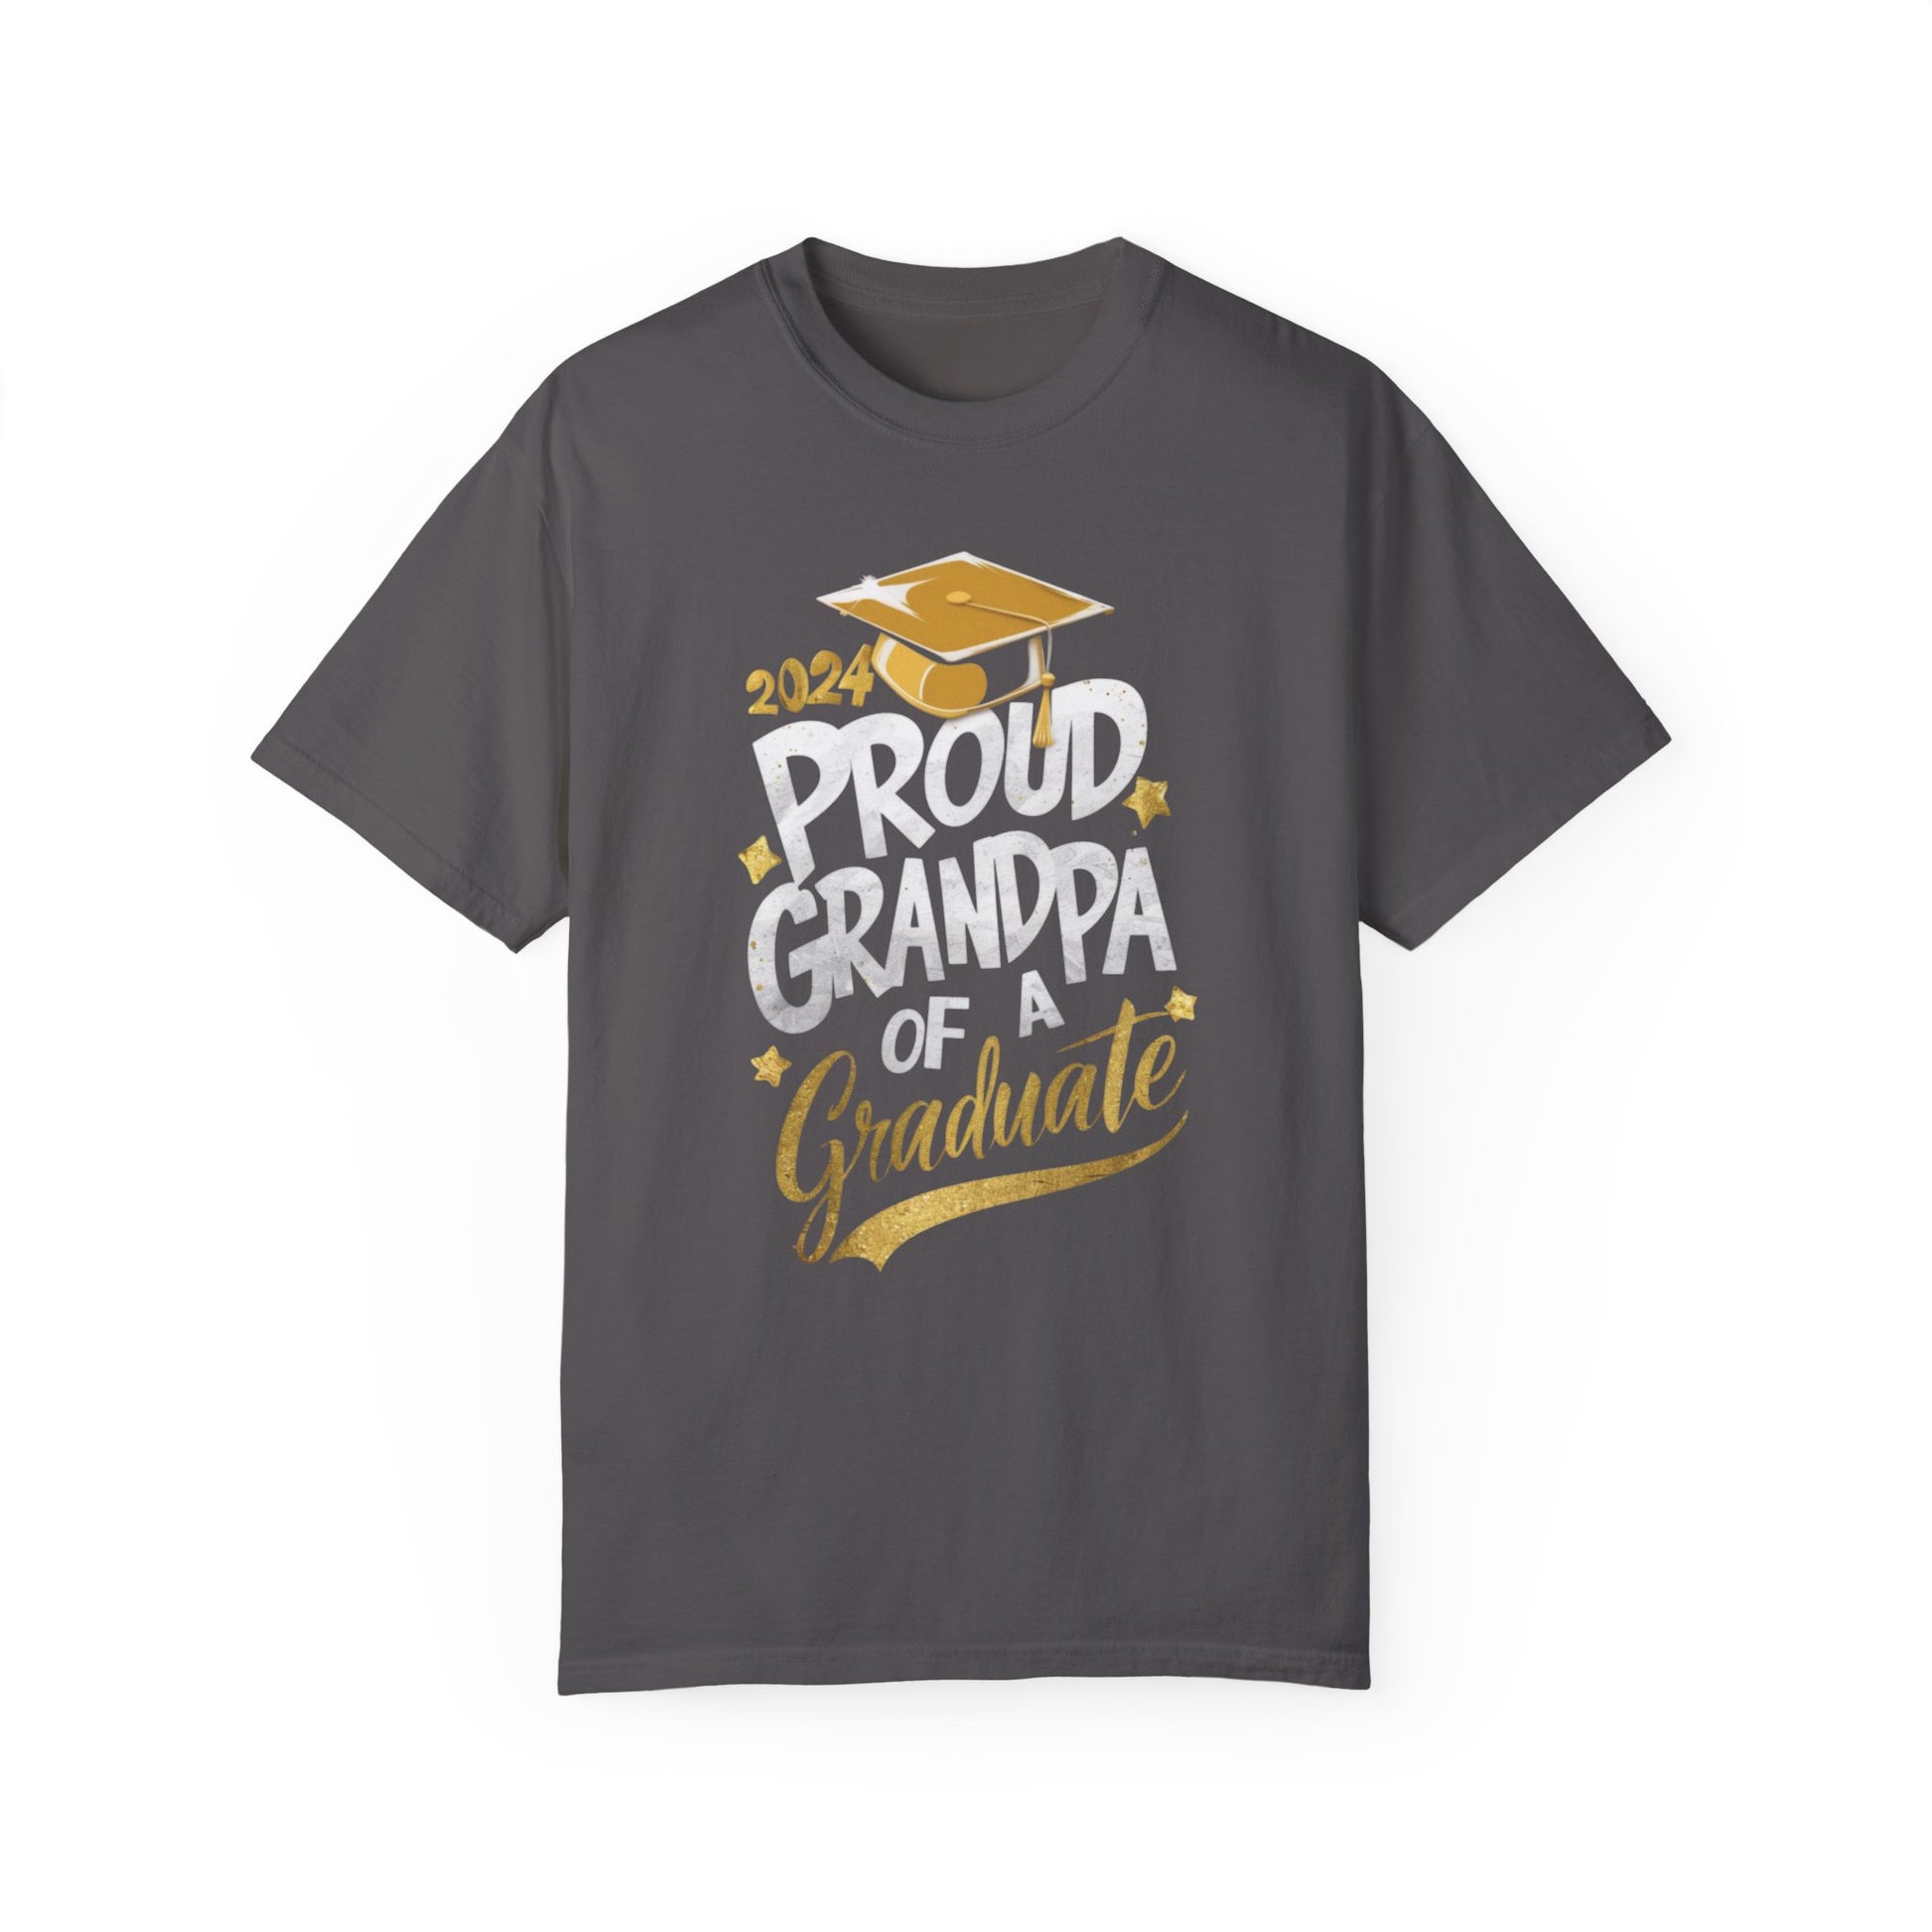 Proud Grandpa of a 2024 Graduate Unisex Garment-dyed T-shirt Cotton Funny Humorous Graphic Soft Premium Unisex Men Women Graphite T-shirt Birthday Gift-8